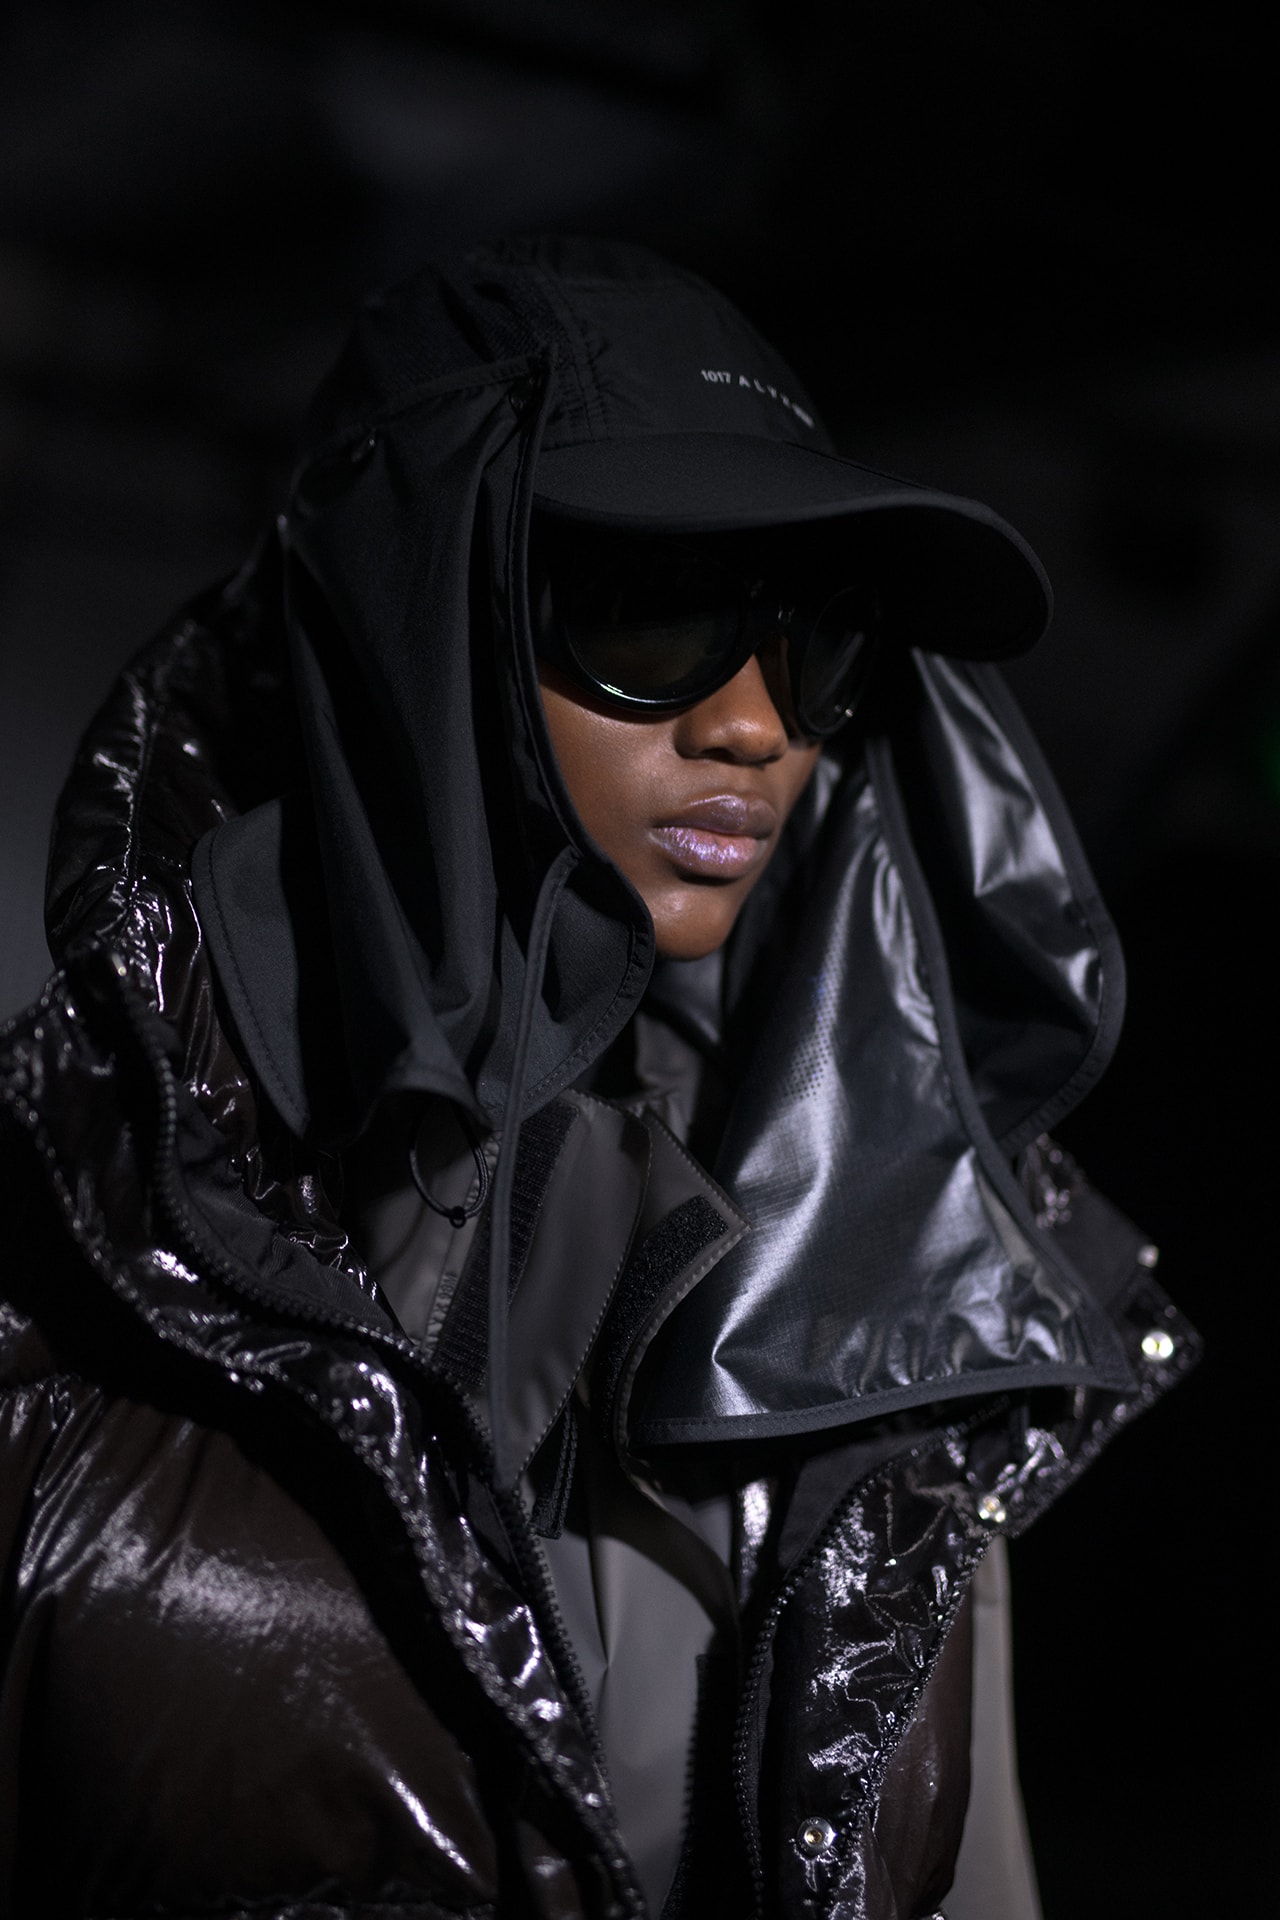 Moncler Genius Milan Fashion Week Presentation 2019 Alyx Collaboration Matthew Williams Black Sunglasses Hood